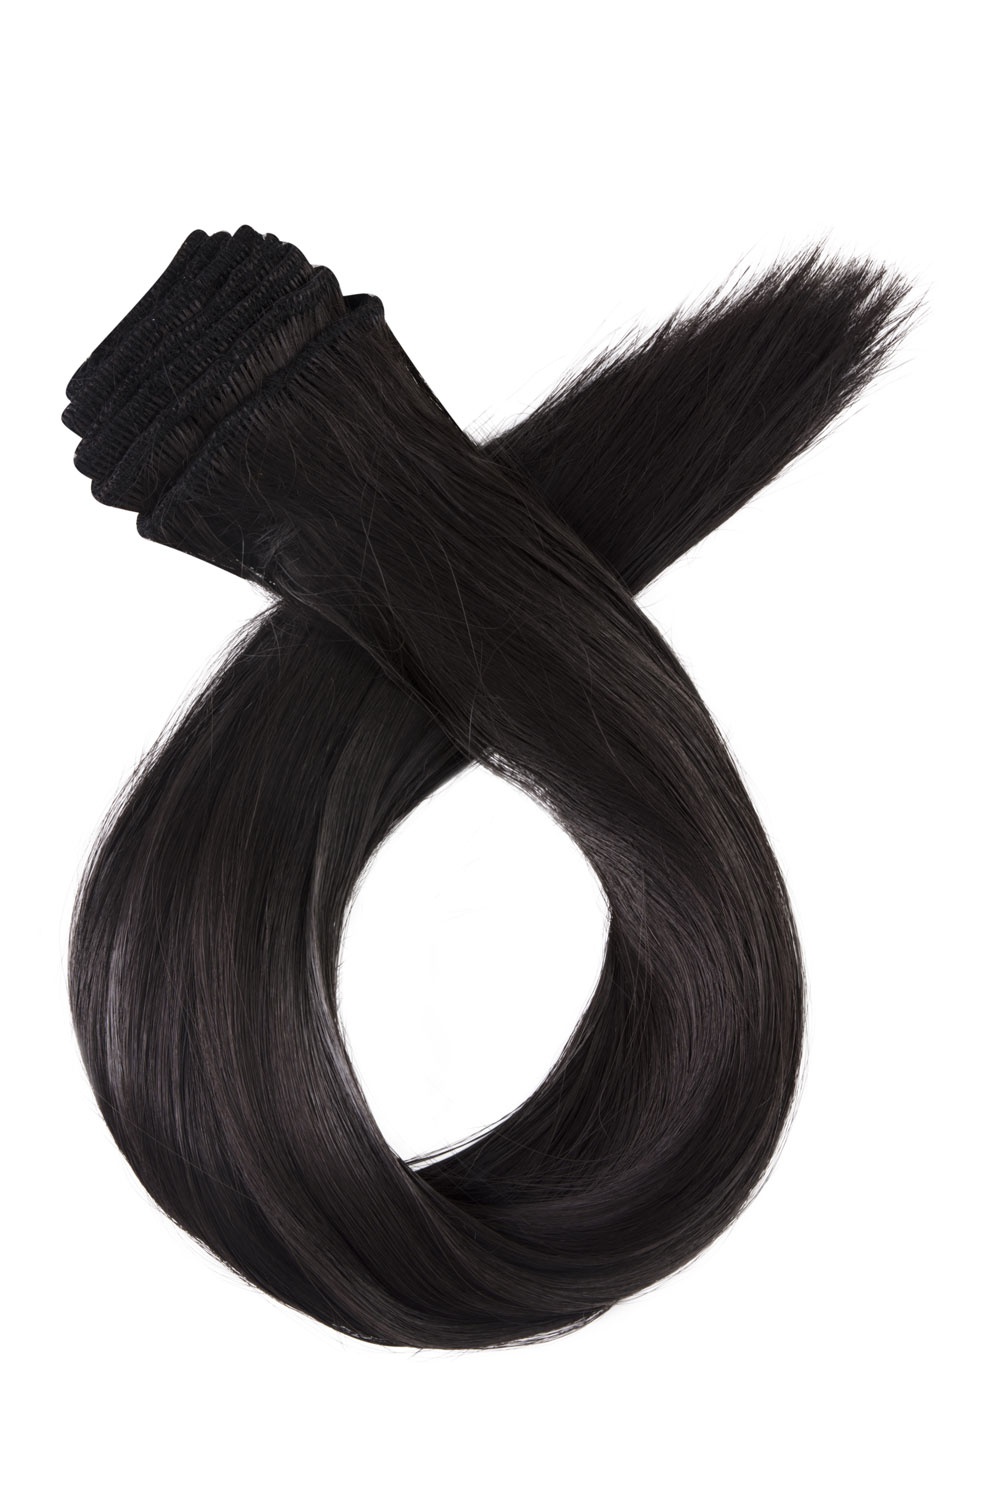 Stredne hnedé clip in vlasy, 60cm, 150g, farba 4